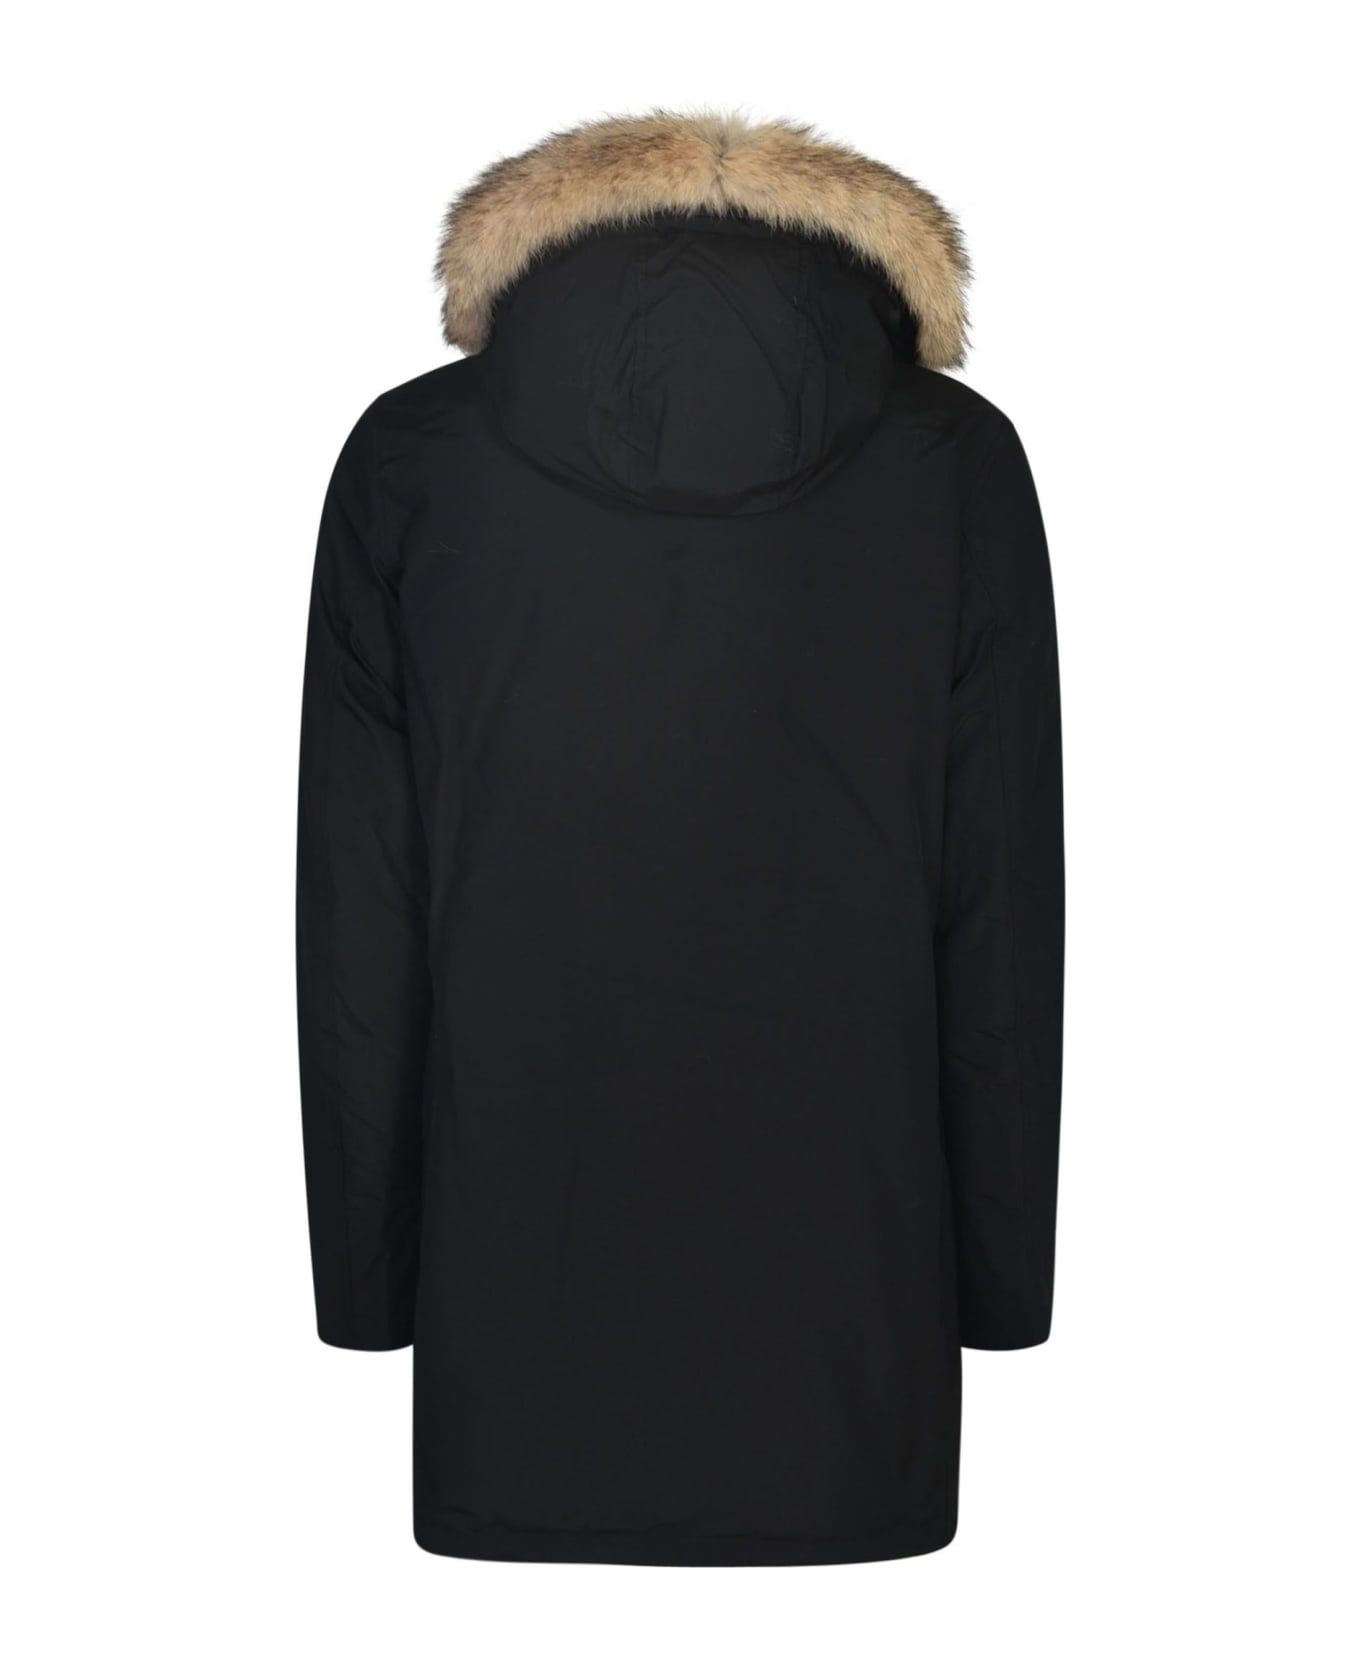 Woolrich Fur Detailed Parka - Black